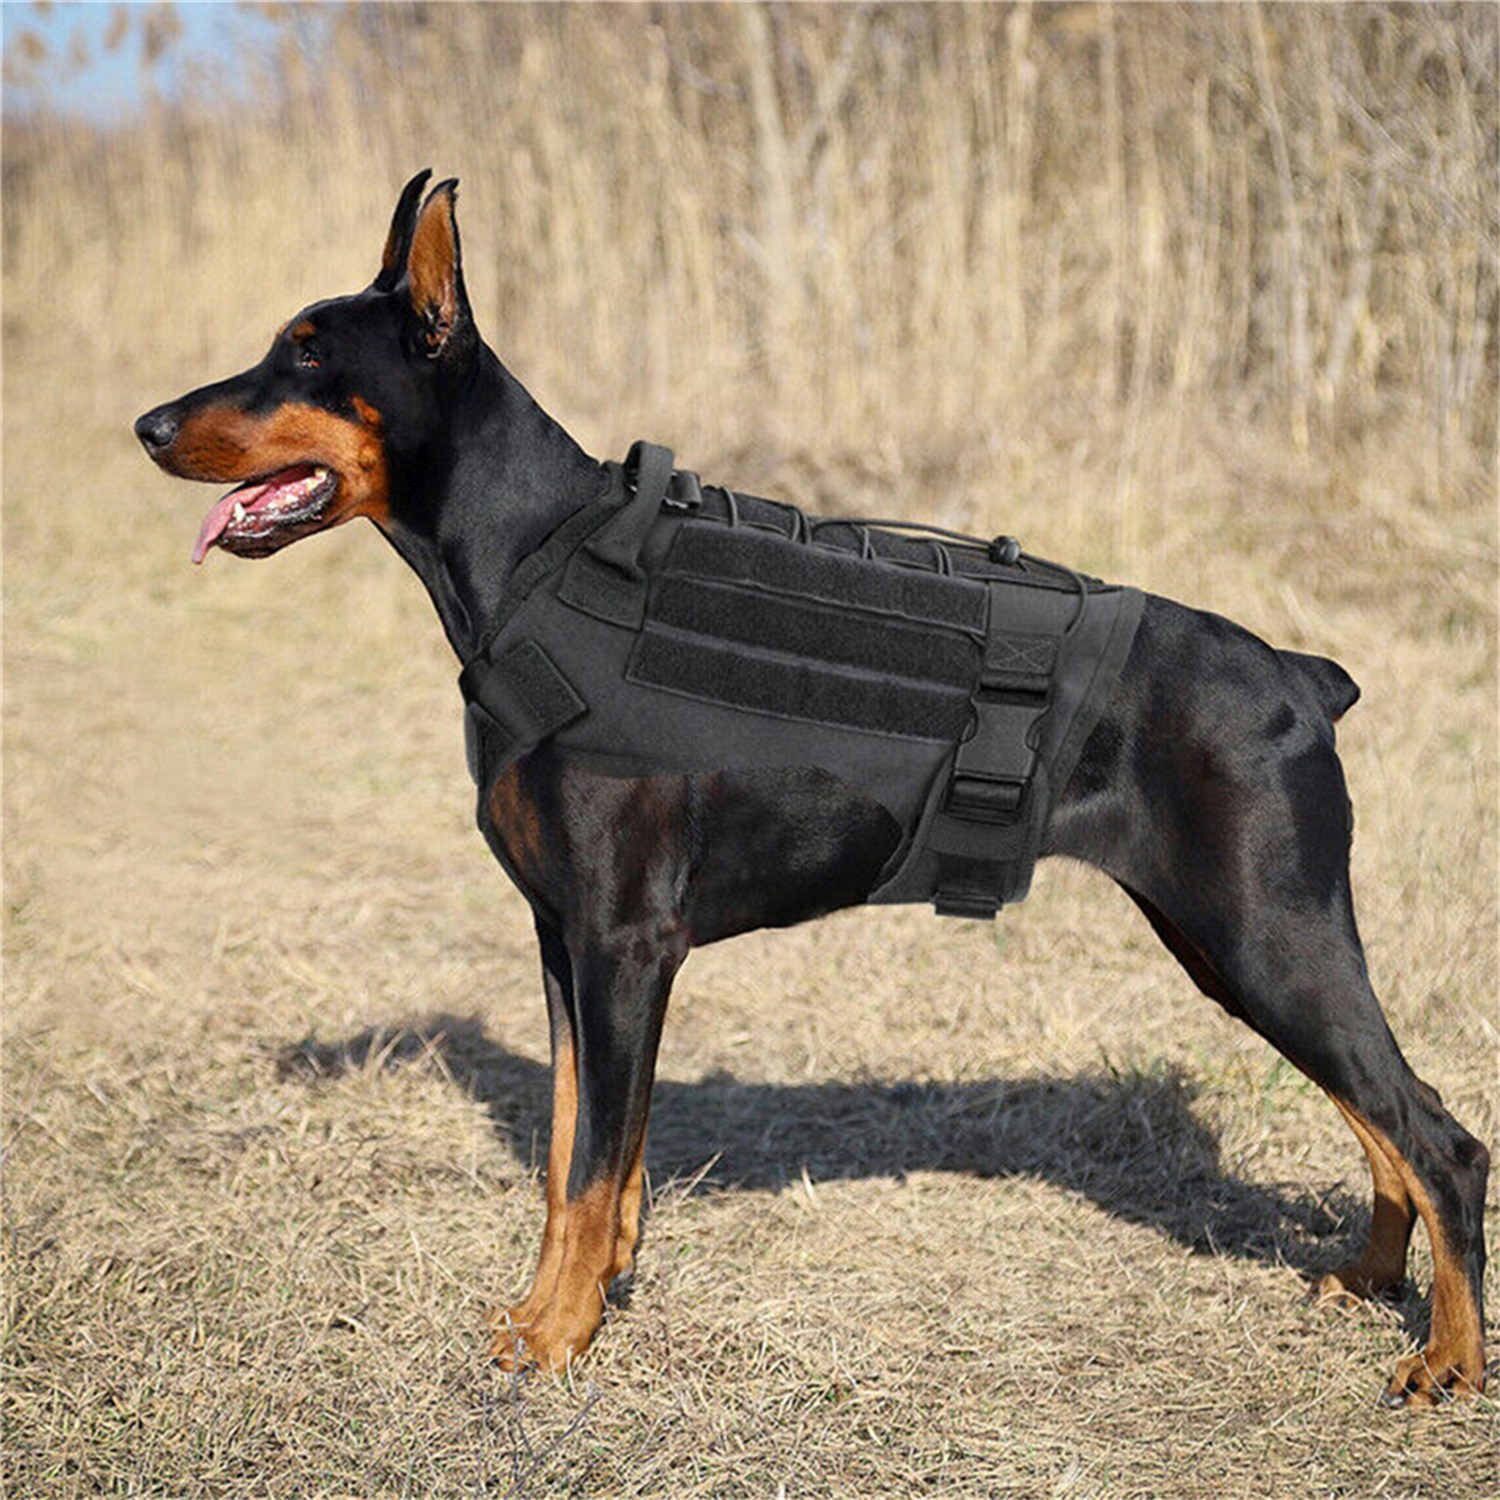 Pefilos XL Tactical Dog Harness Full Buckled Dog Sport Vest for Large Dogs  No Pull Dog Jacket, Military Adjustable Easy to Put On Dog Vest for Walking  Hiking Training, Black